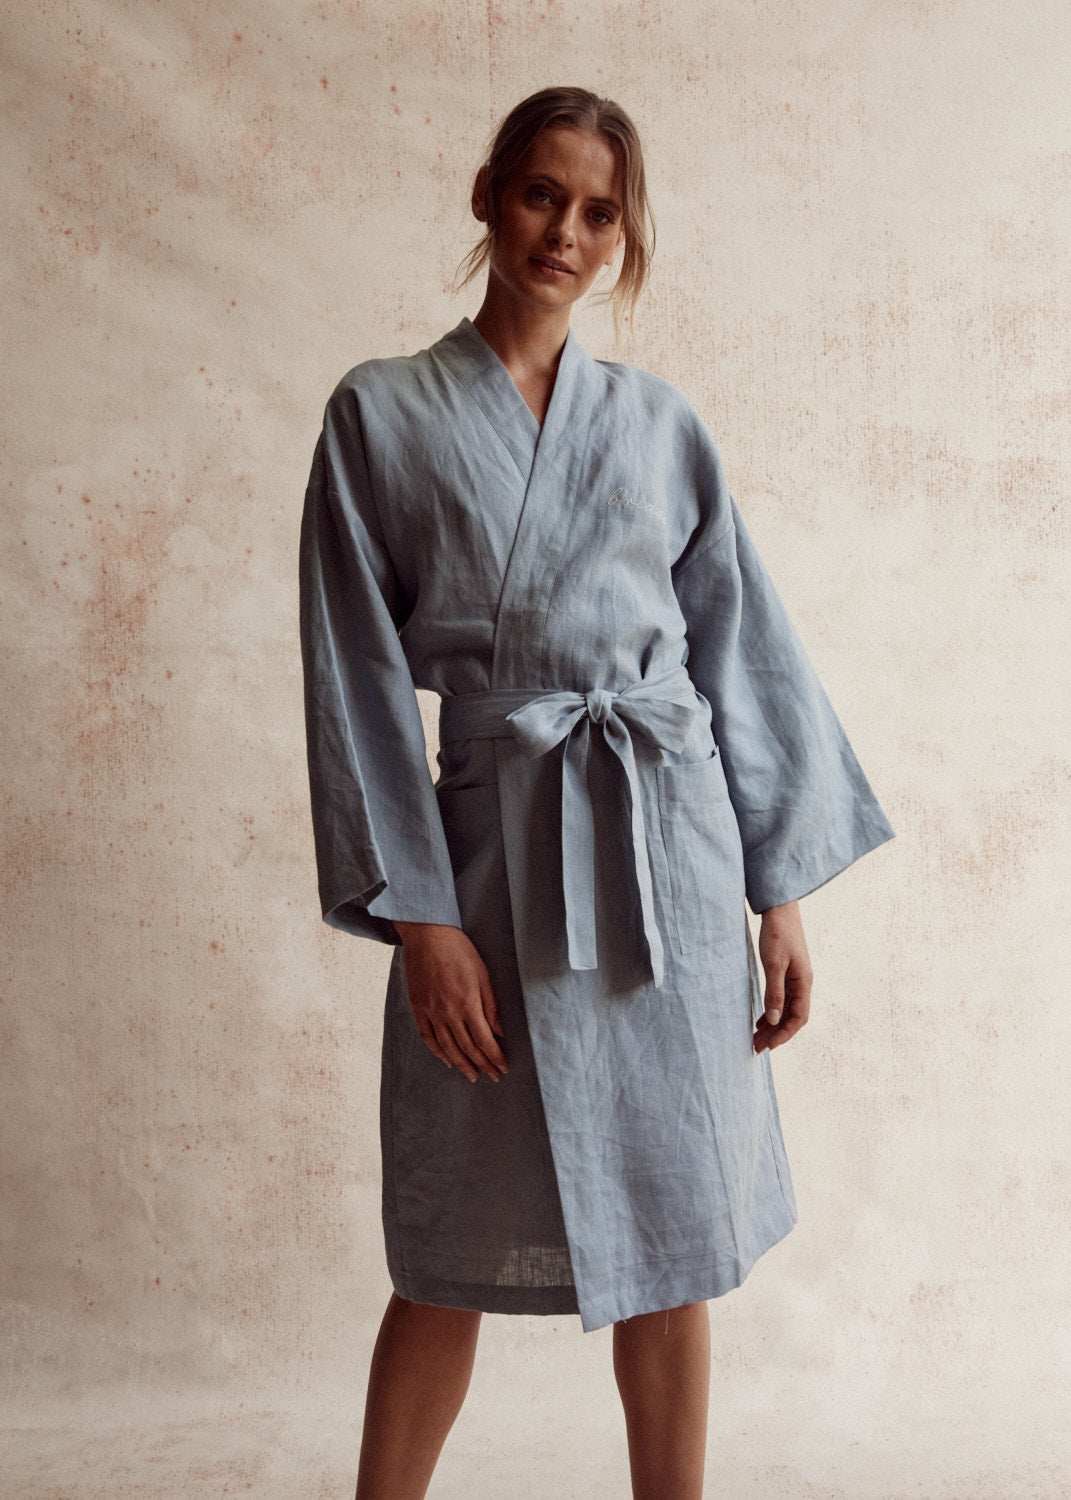 Addison French Linen Robe in Denim Blue